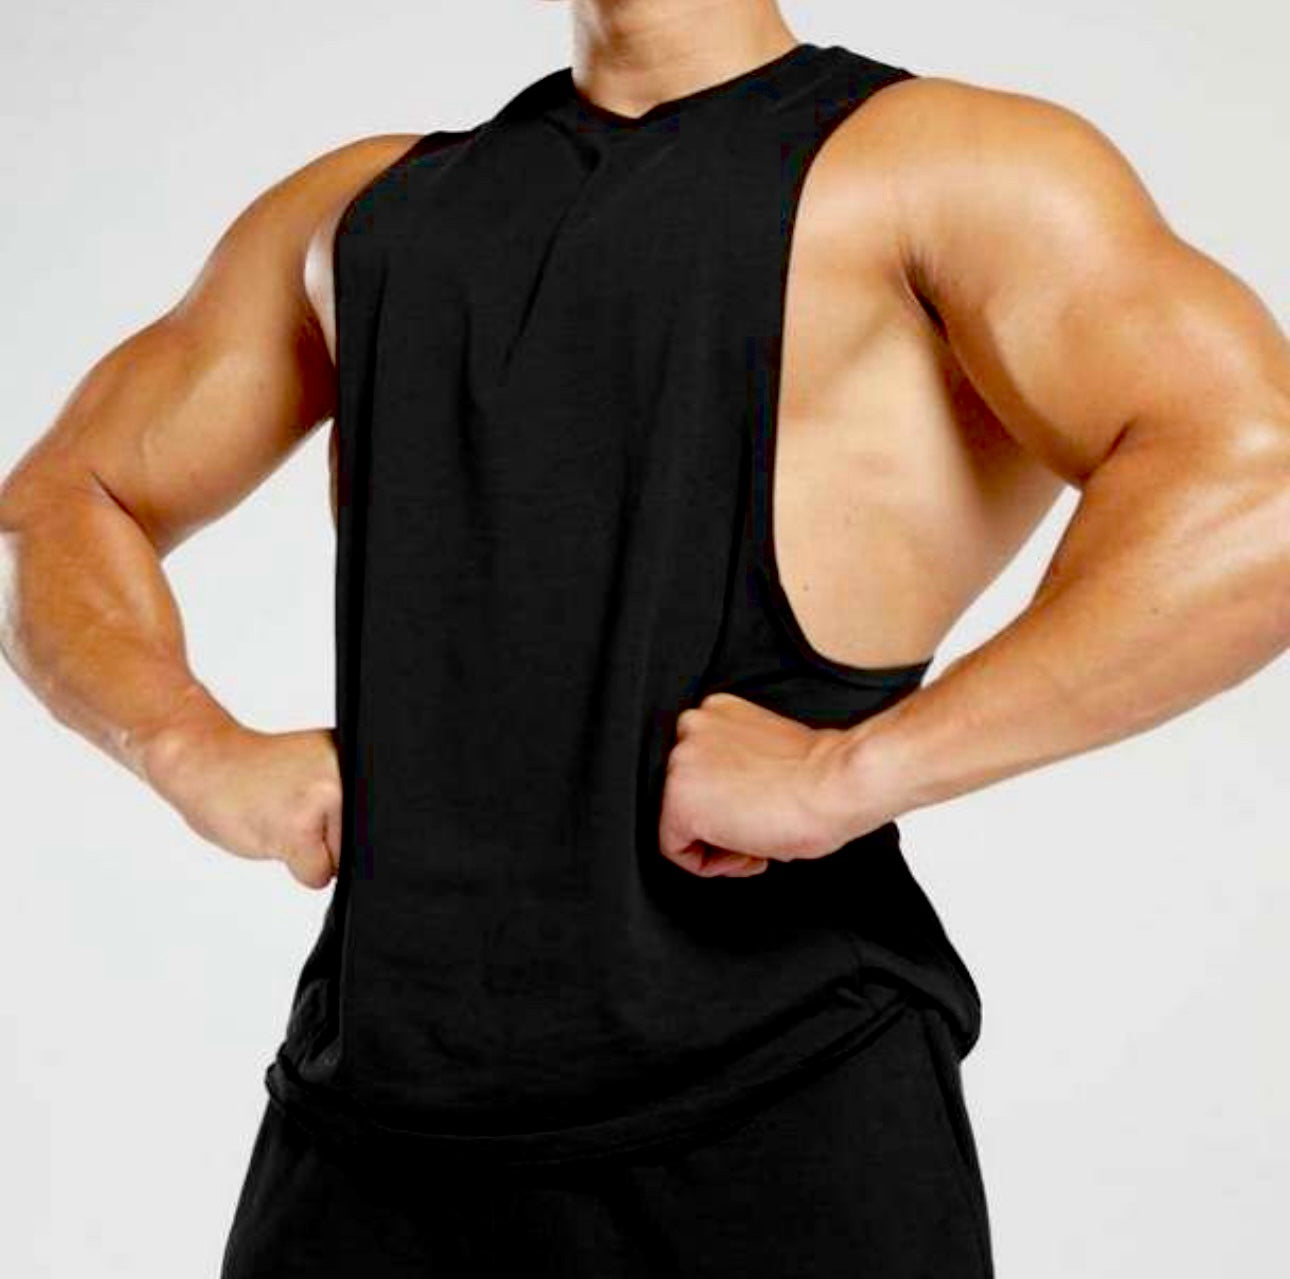 Sleeveless T-shirt Men's Quick Dry
Round Neck Sportswear Plus Size Running Fitness Top